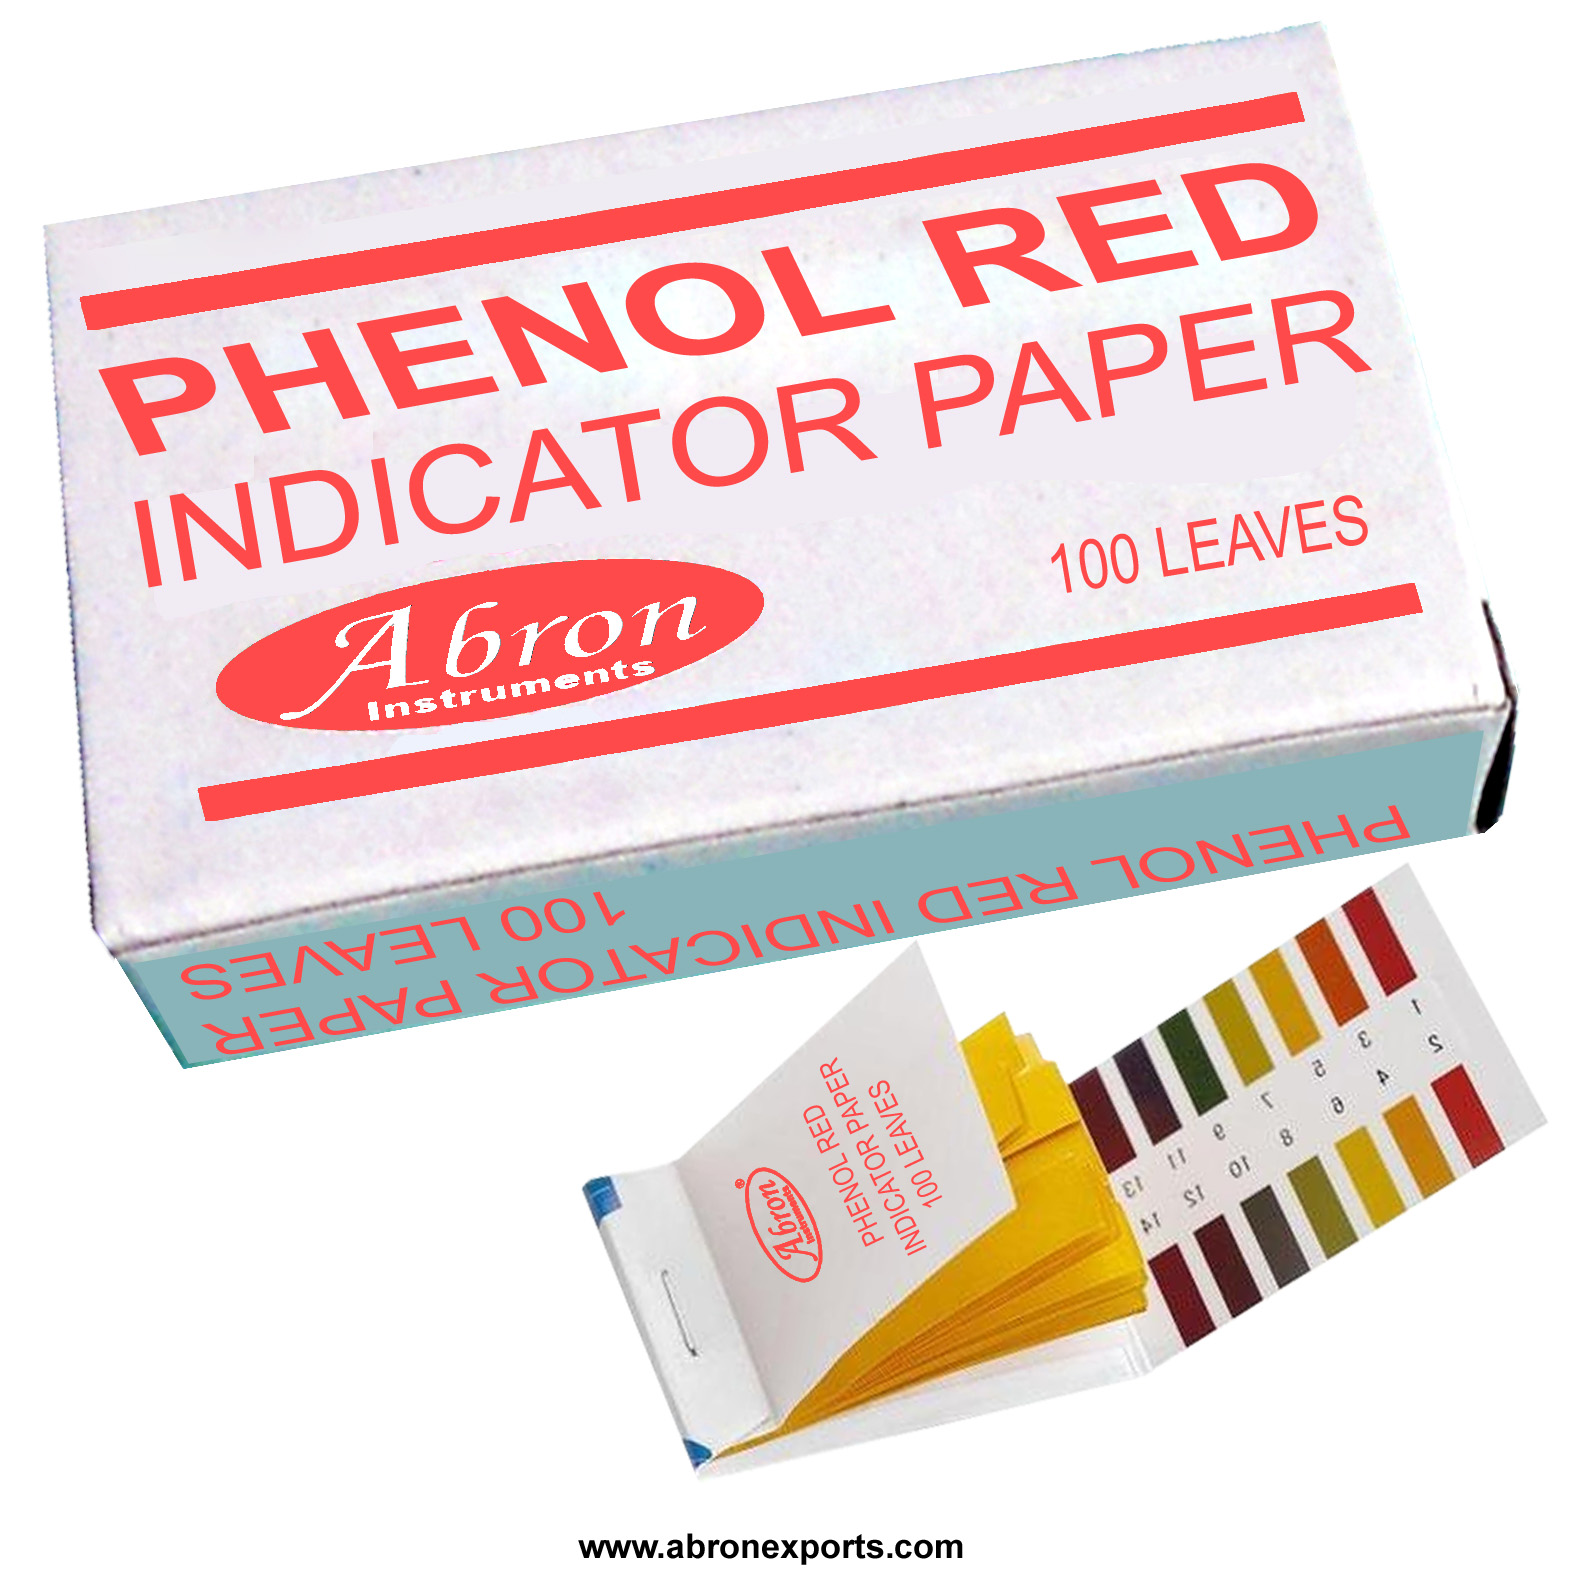 Phenol red indicator paper LR 100 lvs abron IP-1136